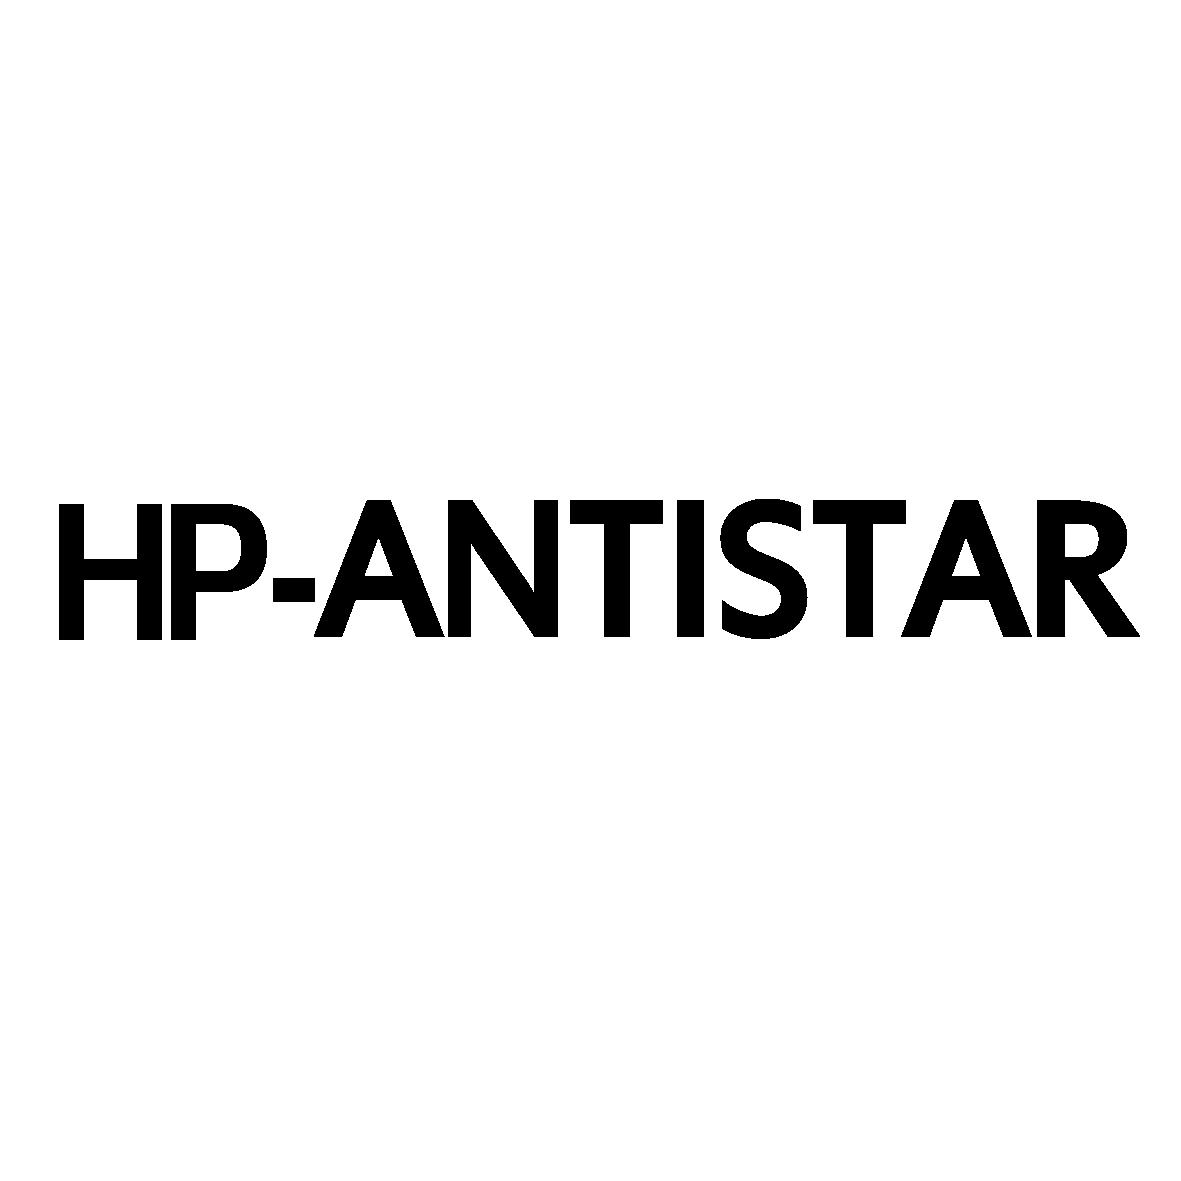 HP-ANTISTAR